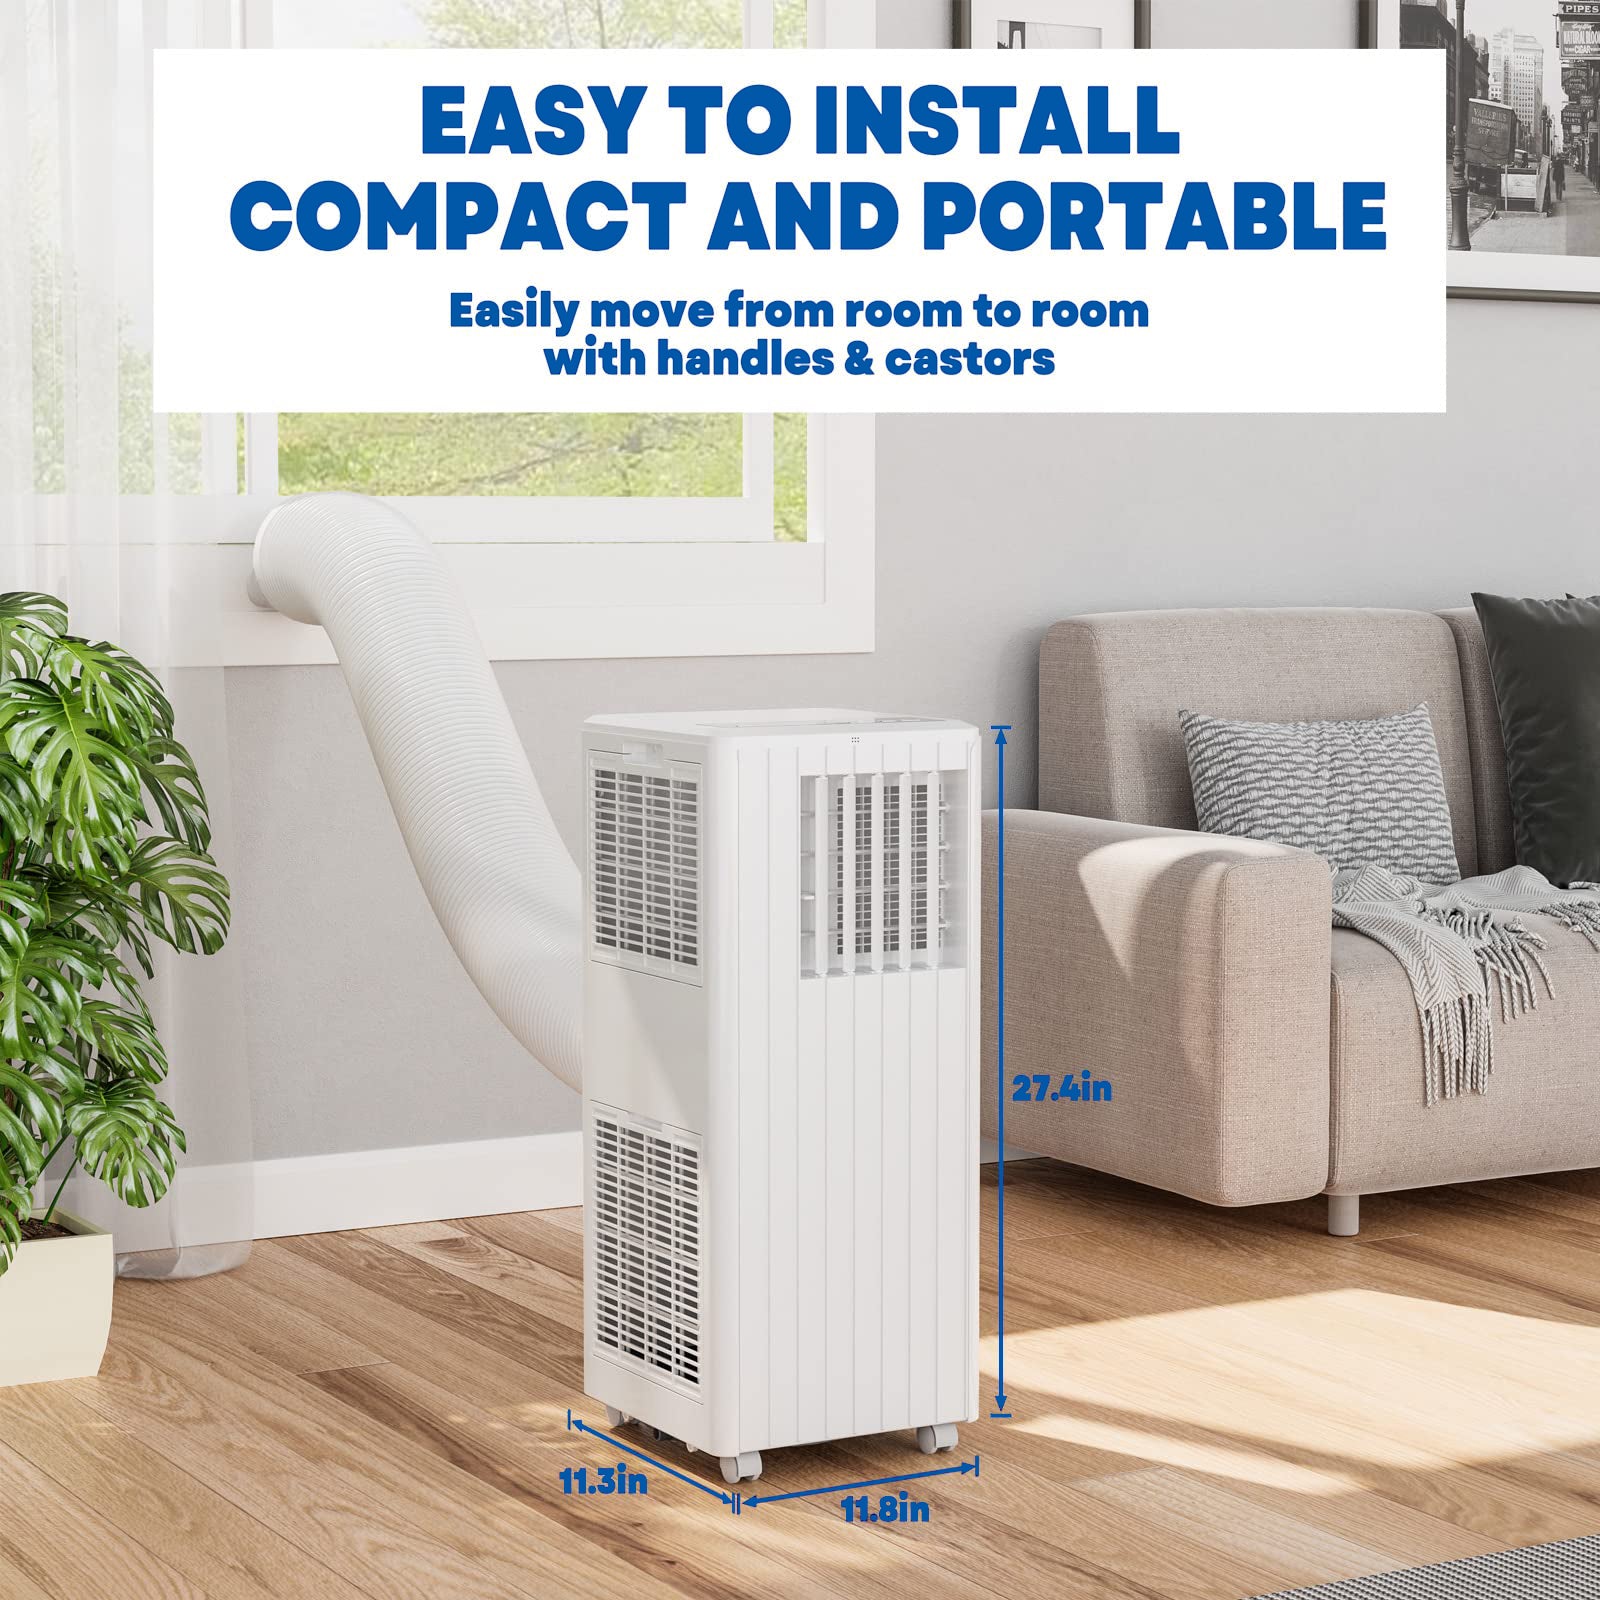 8000 BTU 3-in-1 Air Conditioner, Fan, Dehumidifier for 350 Sq.Ft